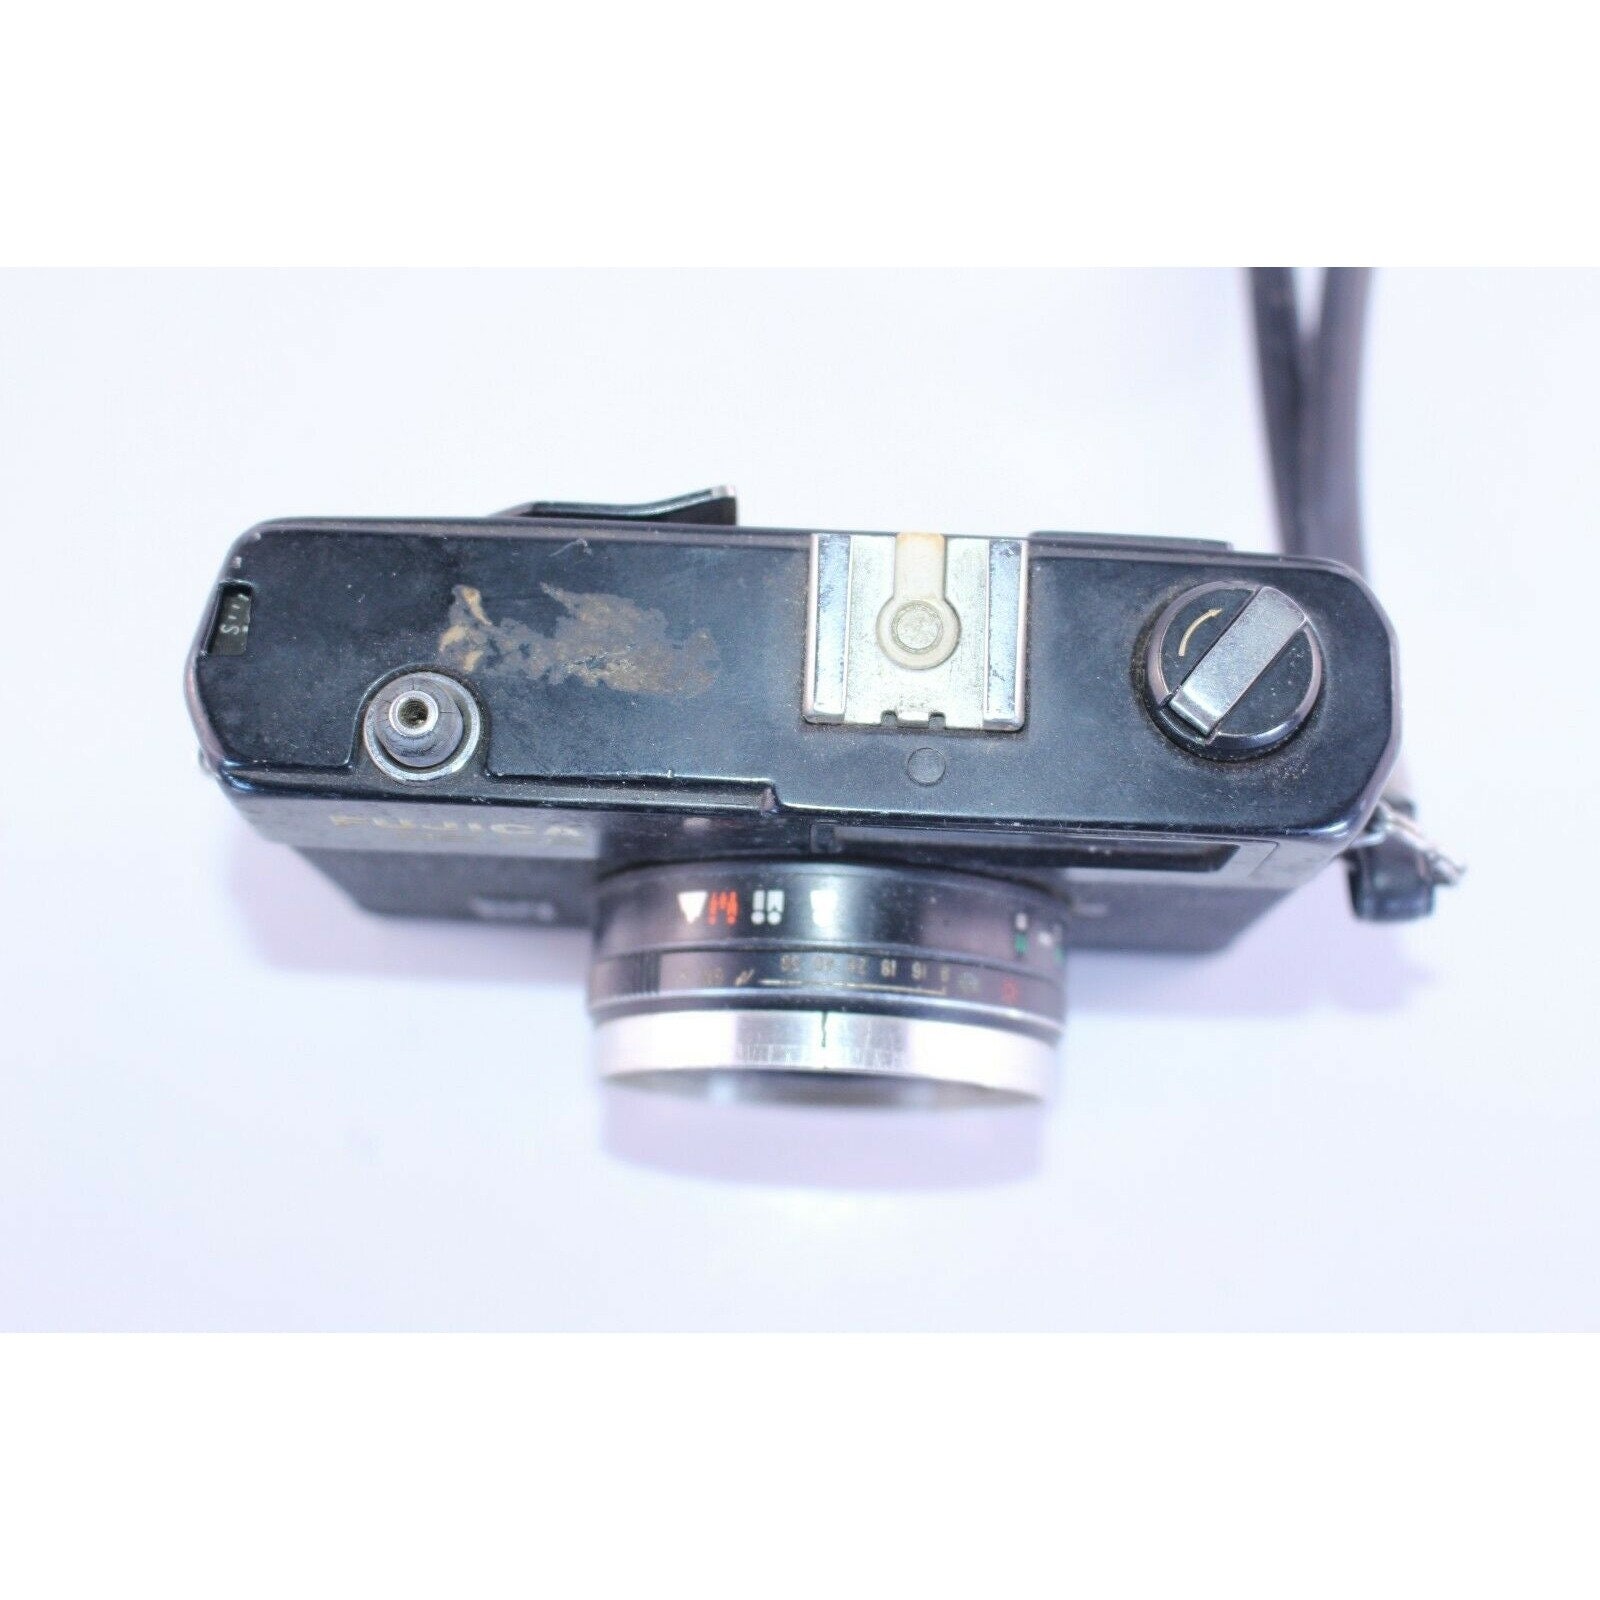 Fujica 35 FS Rangefinder 35mm Film Camera With Fujinon 1:2.8/35 Lens ...